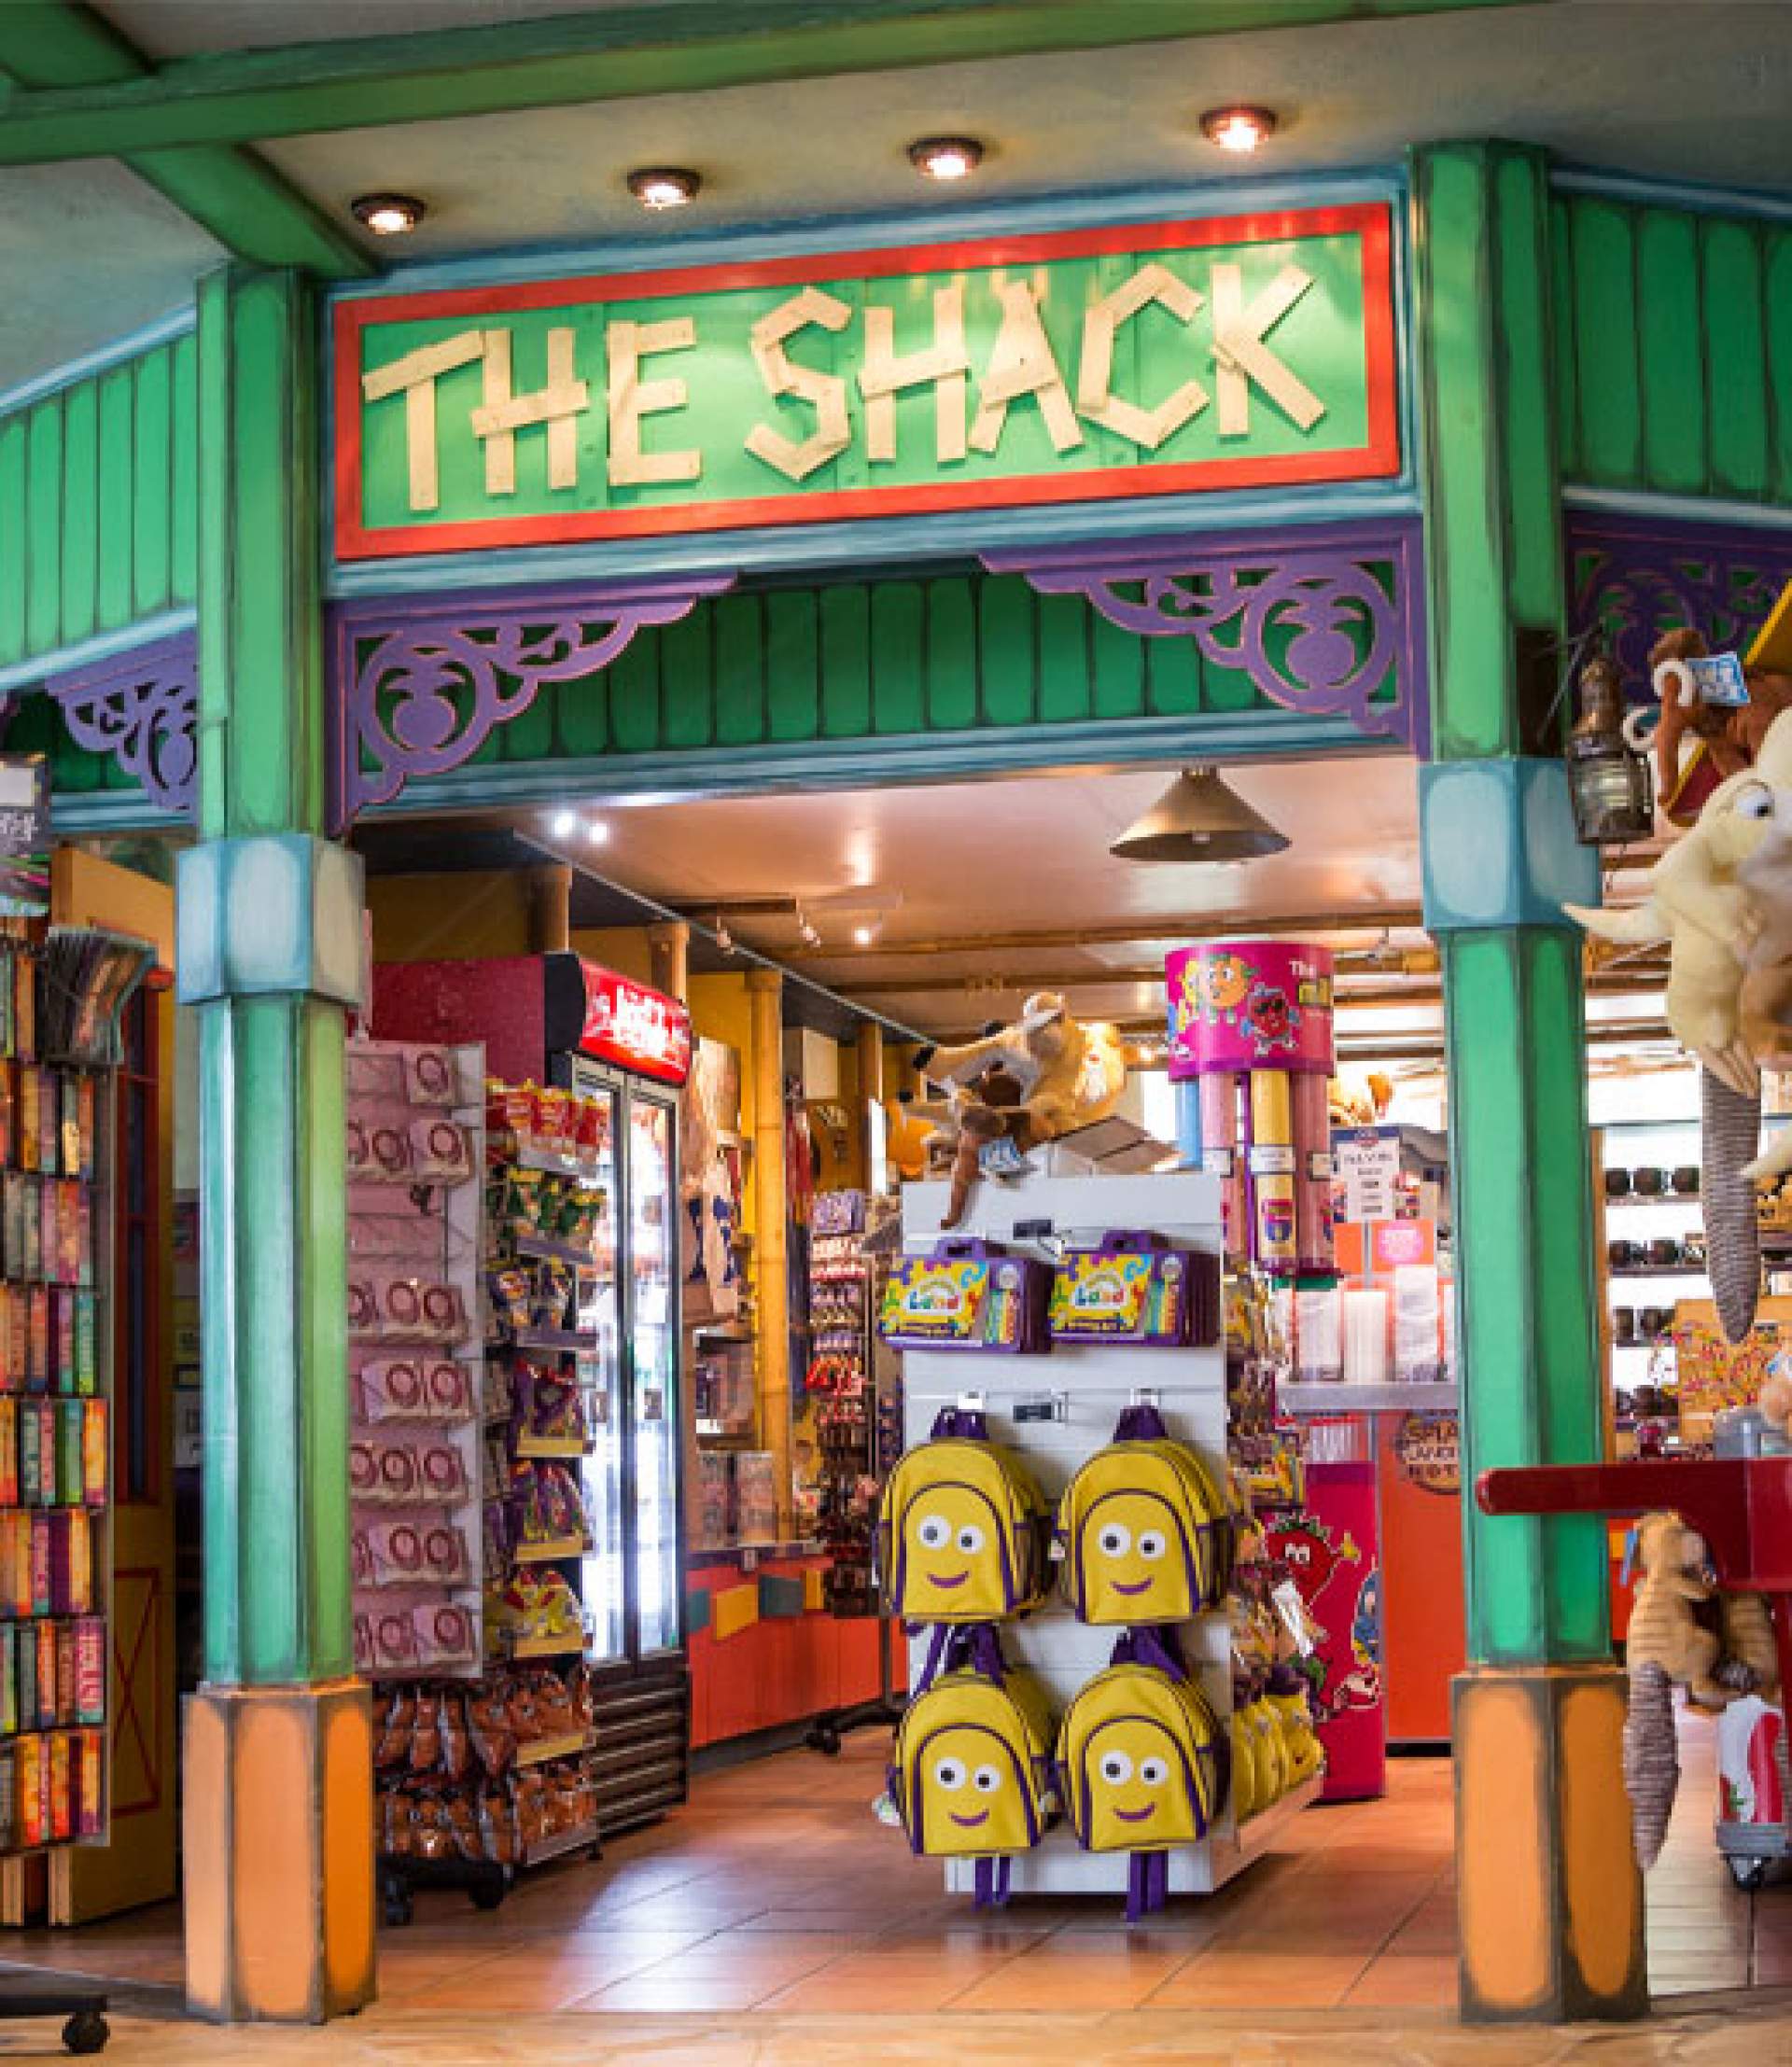 The Shack shop entrance